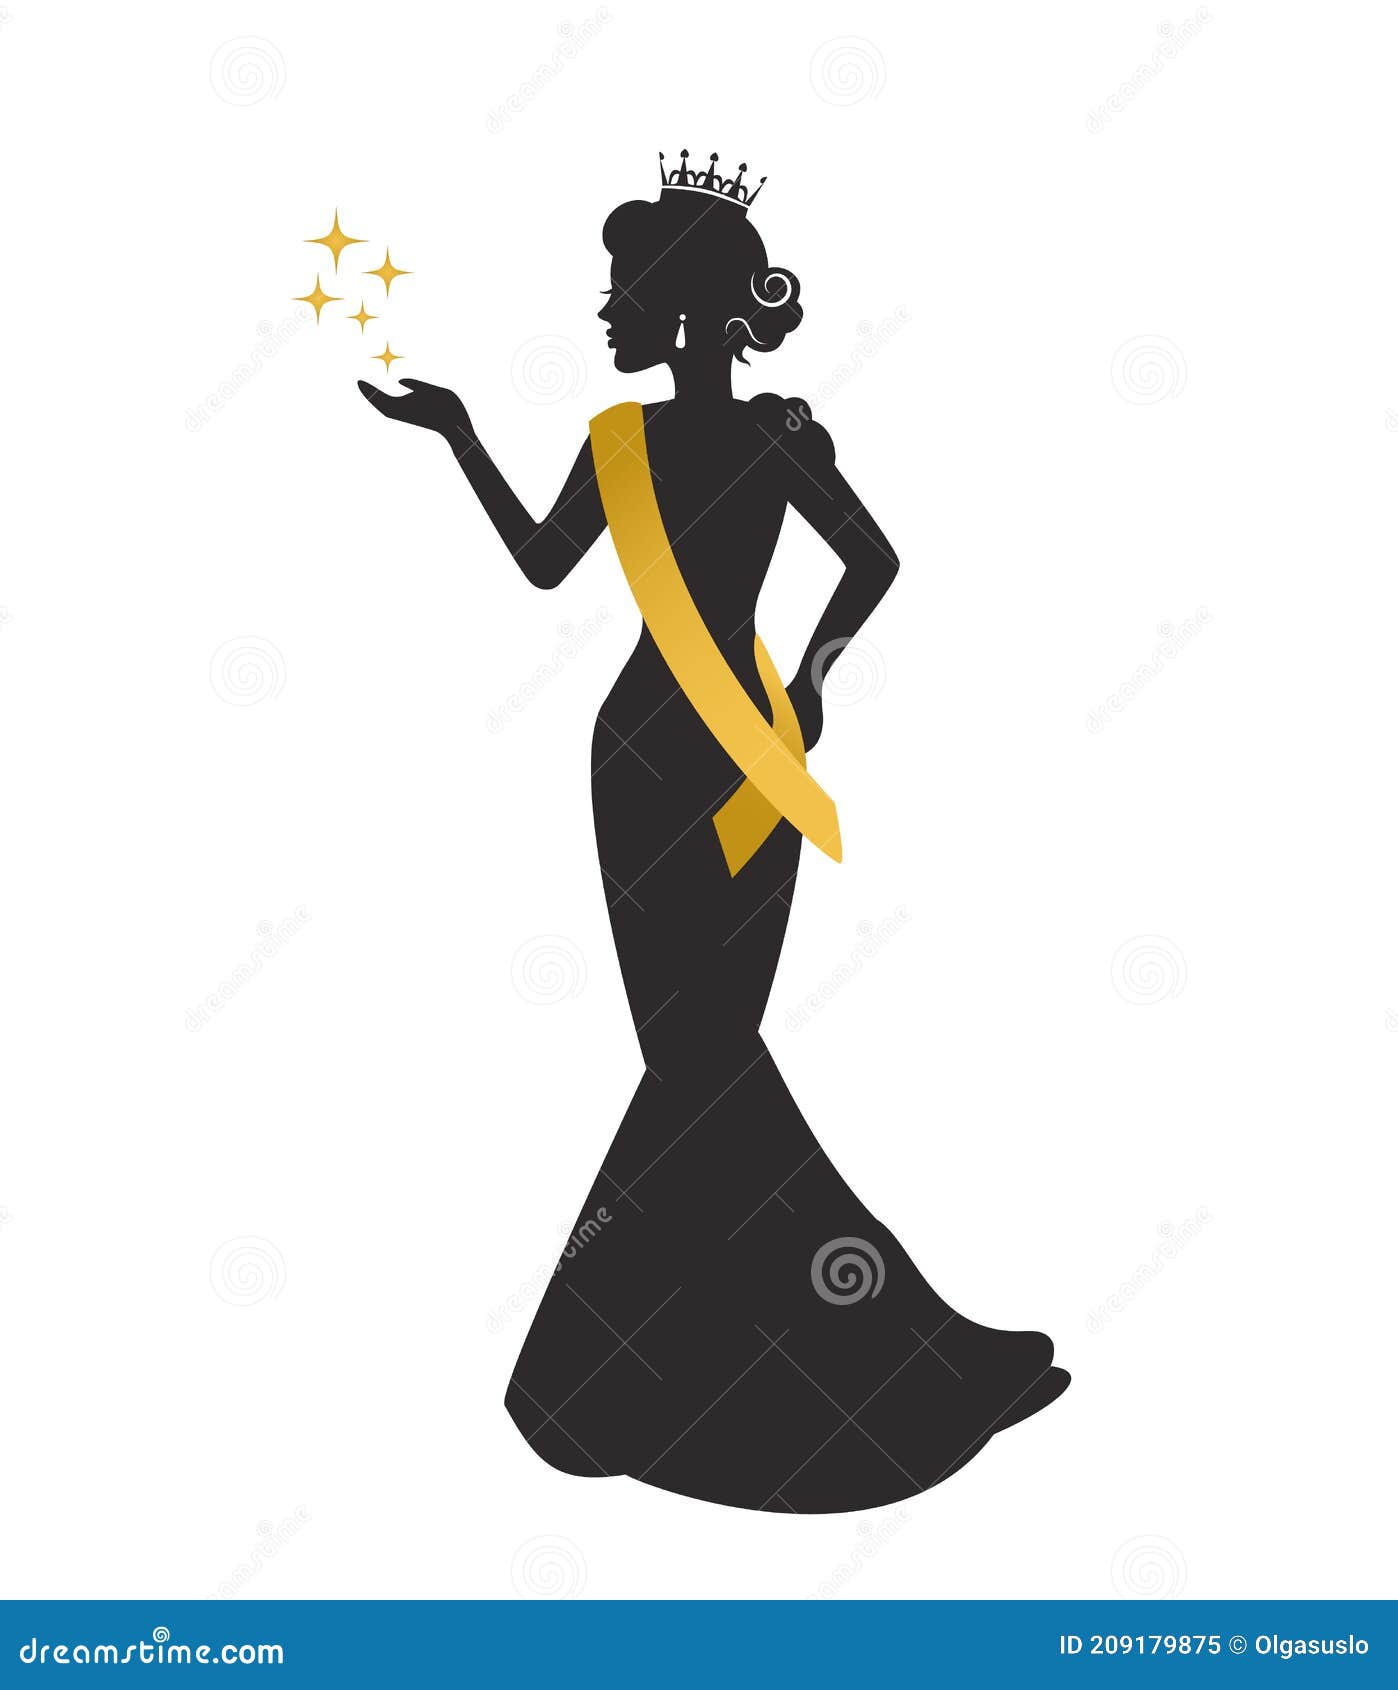 beauty queen silhouette